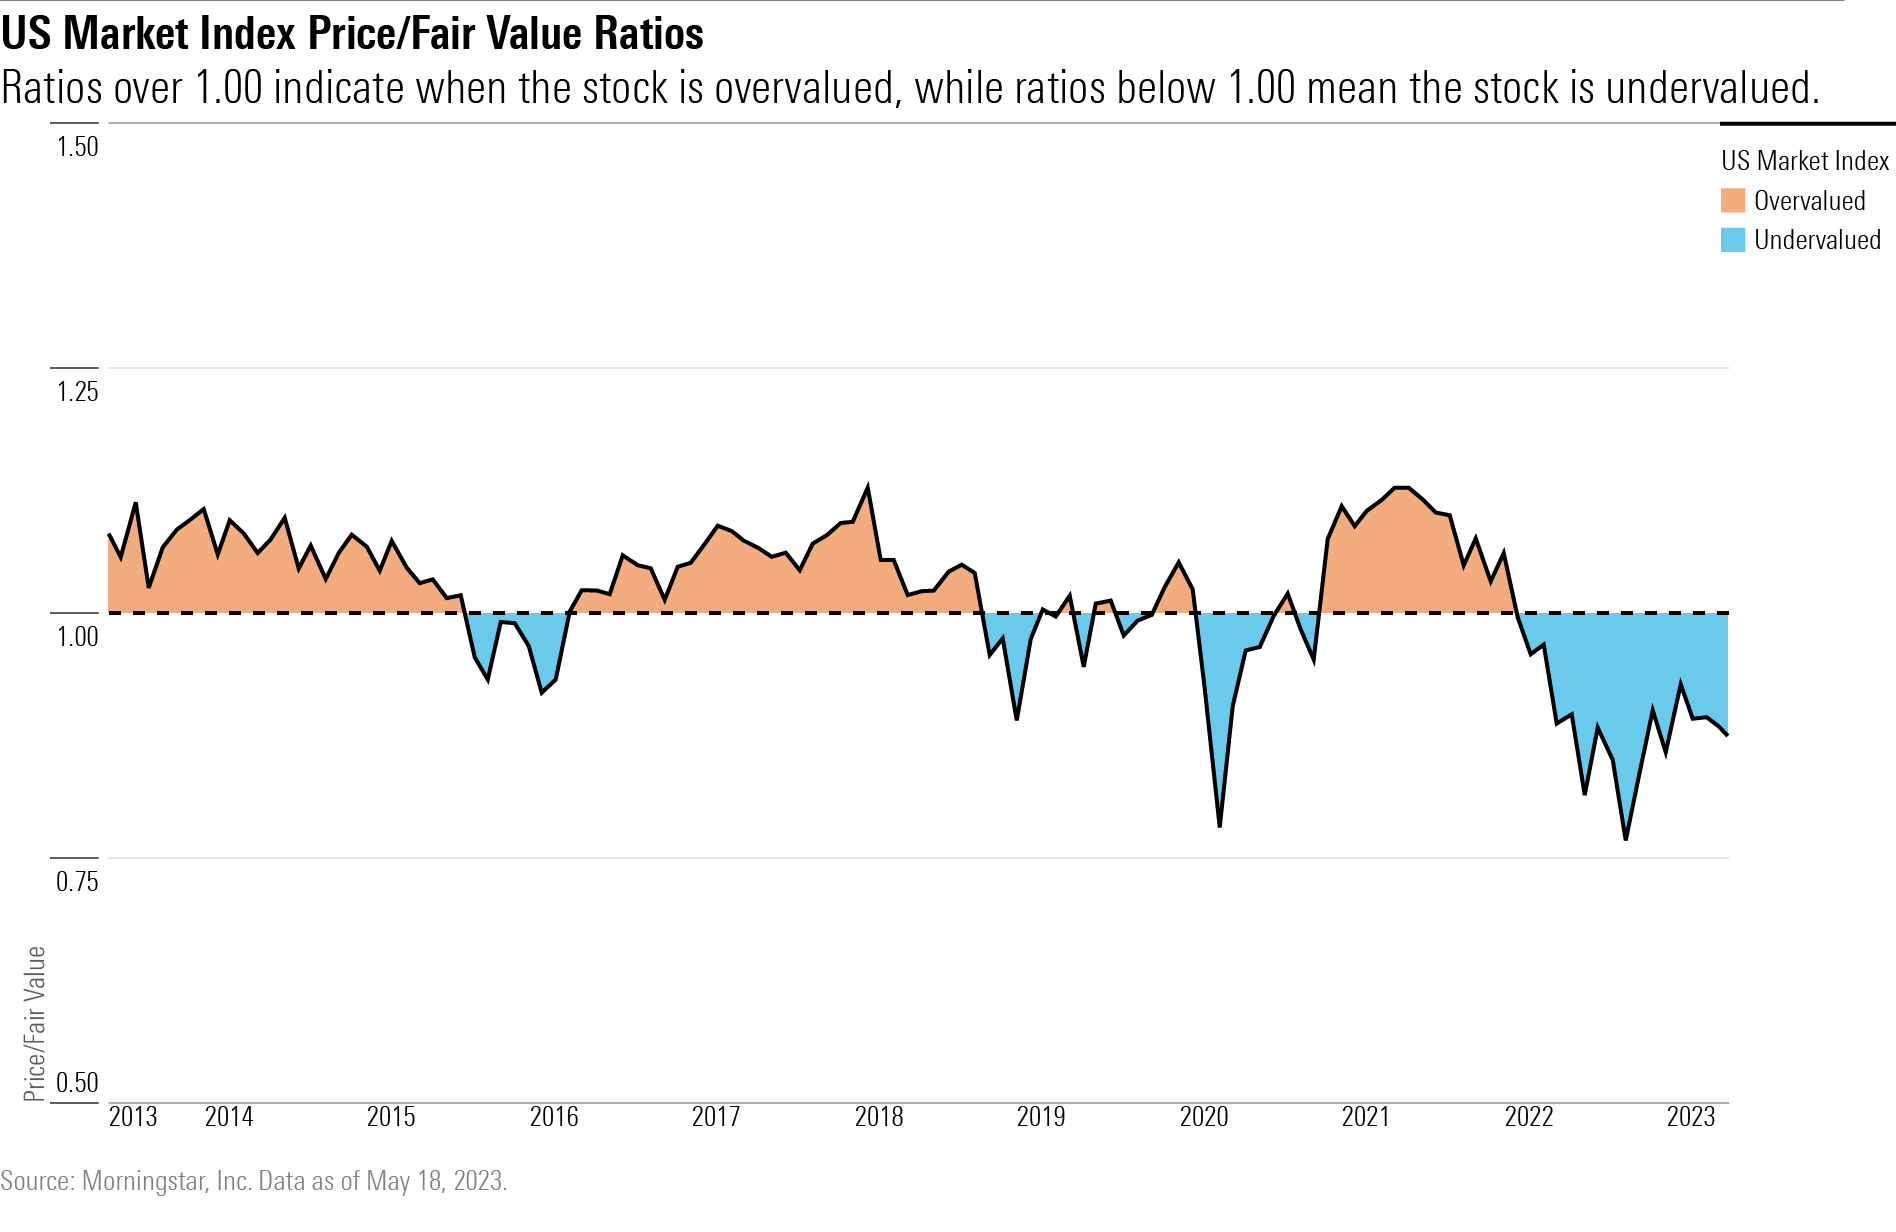 Line chart showing US Market Index Price/Fair Value Ratios